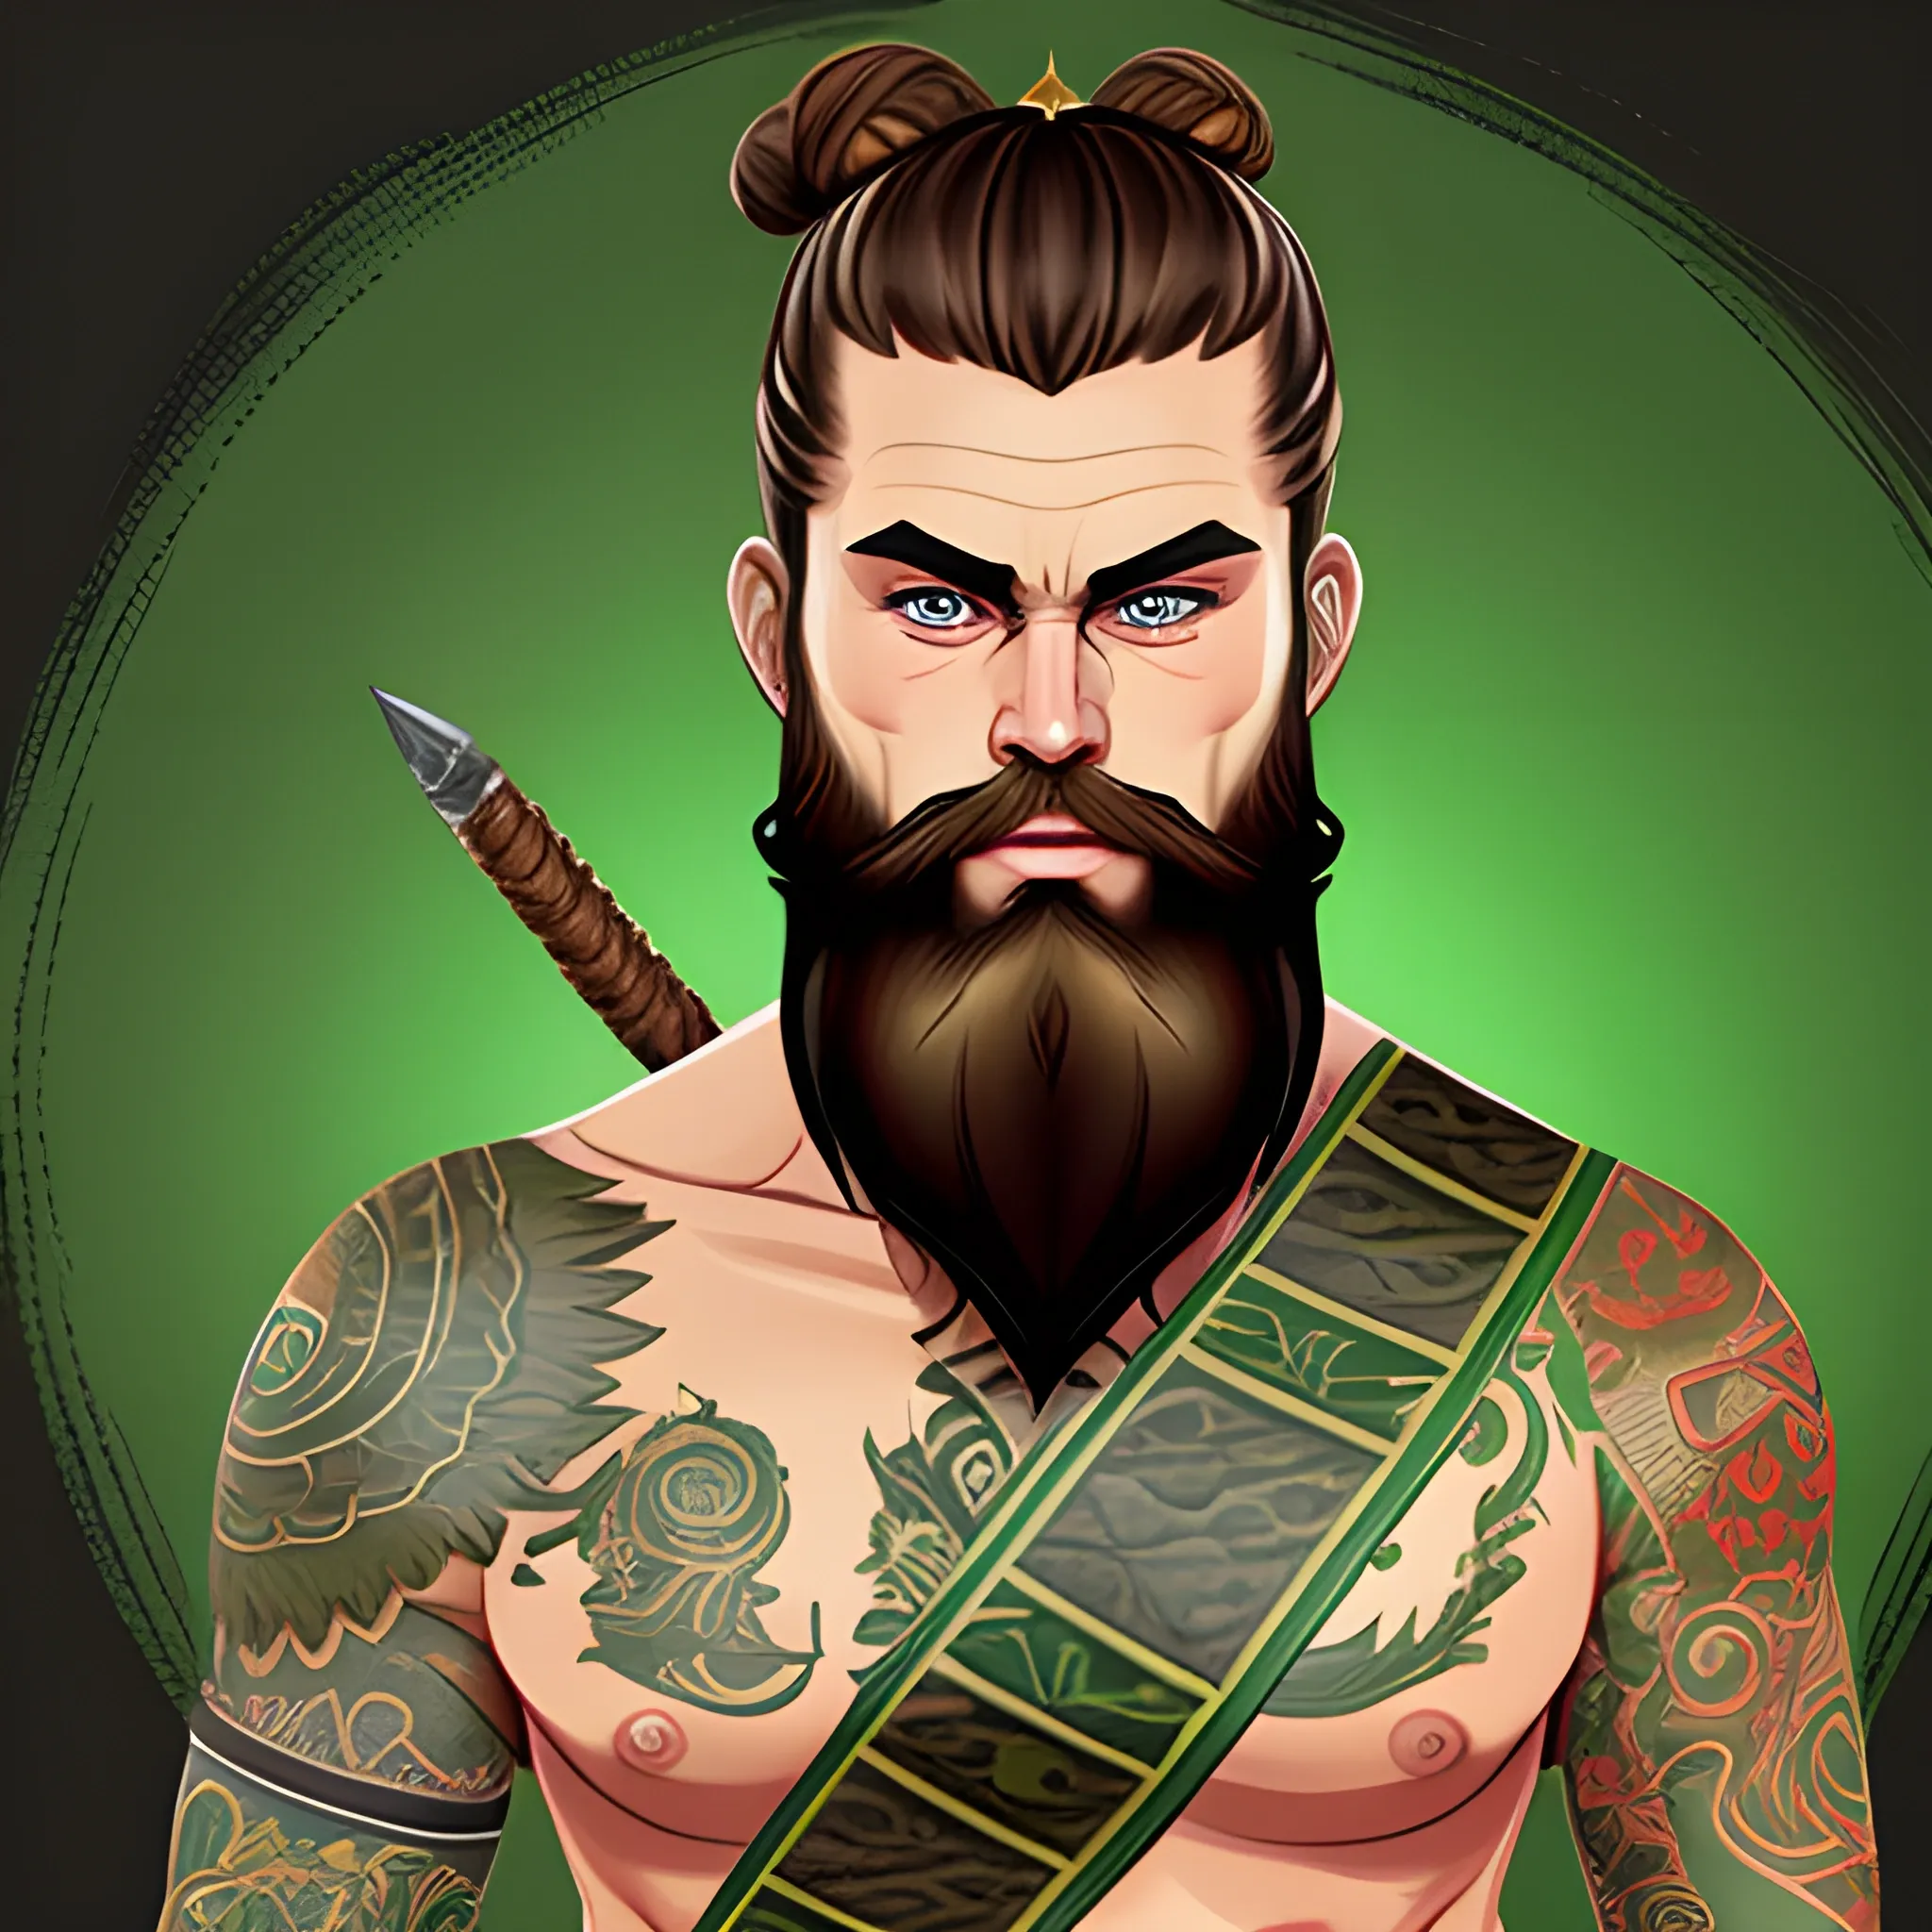 brown hair, man bun, beard, green eyes, dnd artstyle, monk,tattoos
